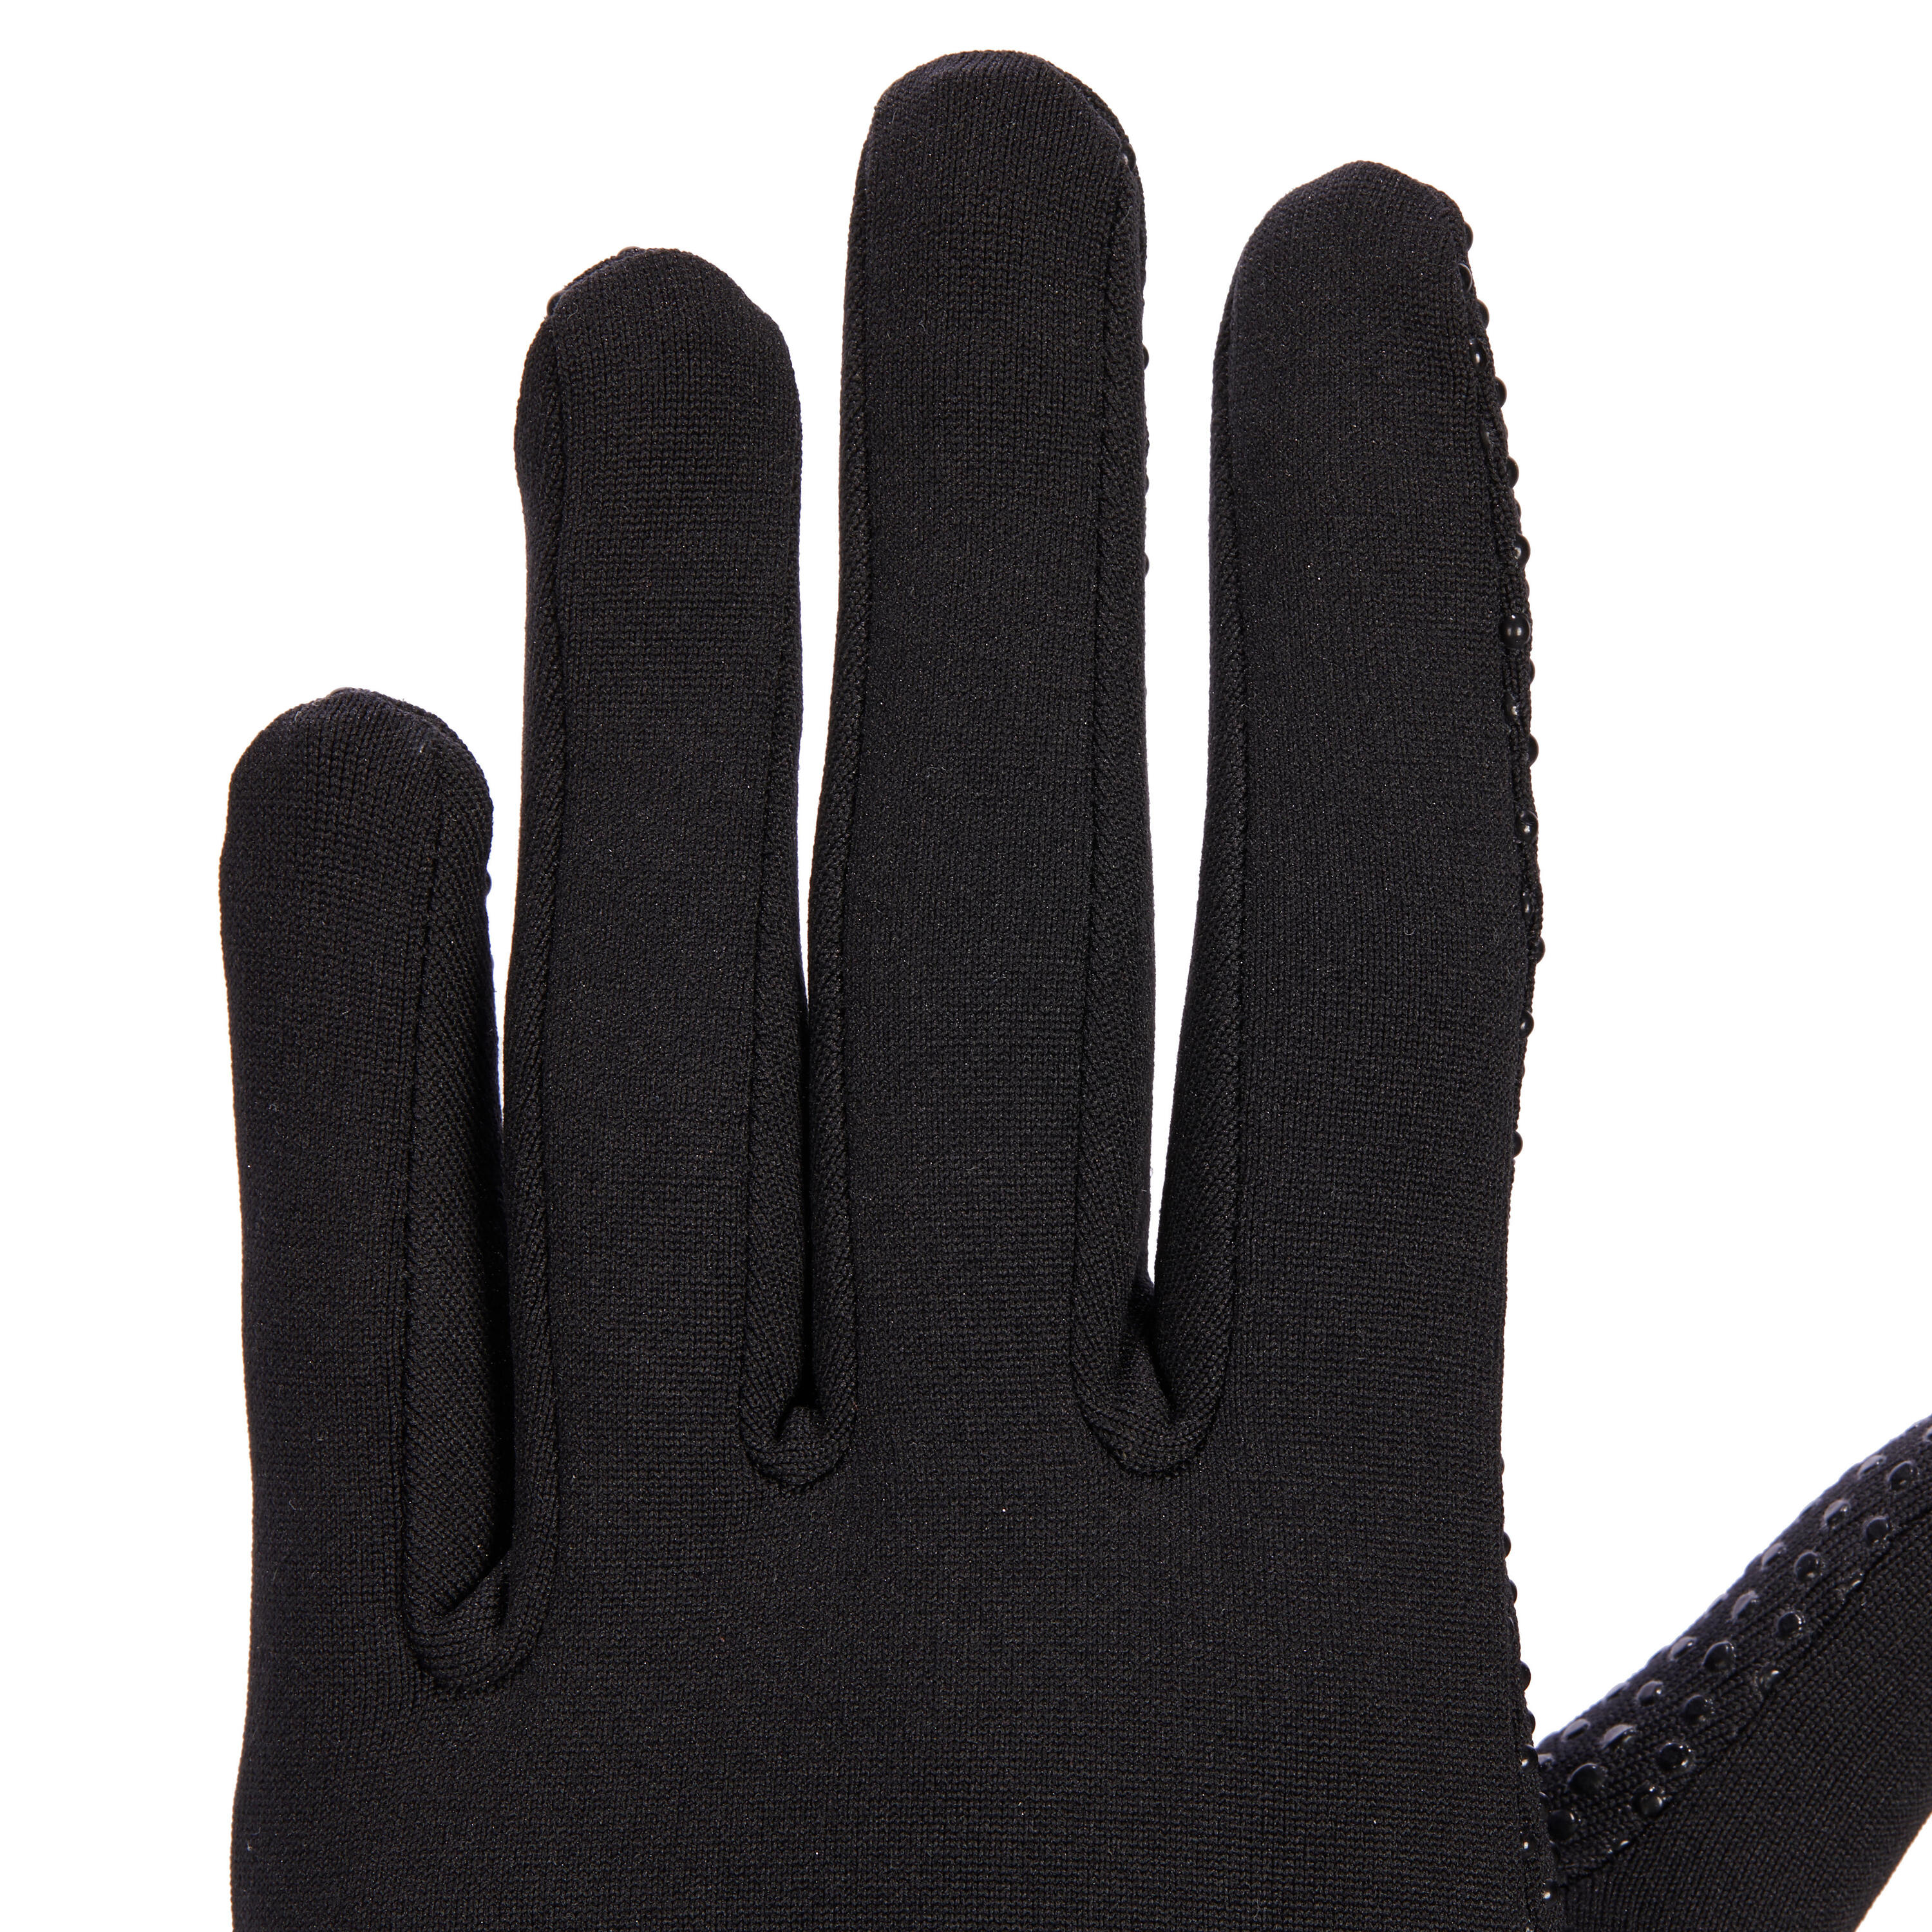 140 Women's Horse Riding Gloves - Black 6/6